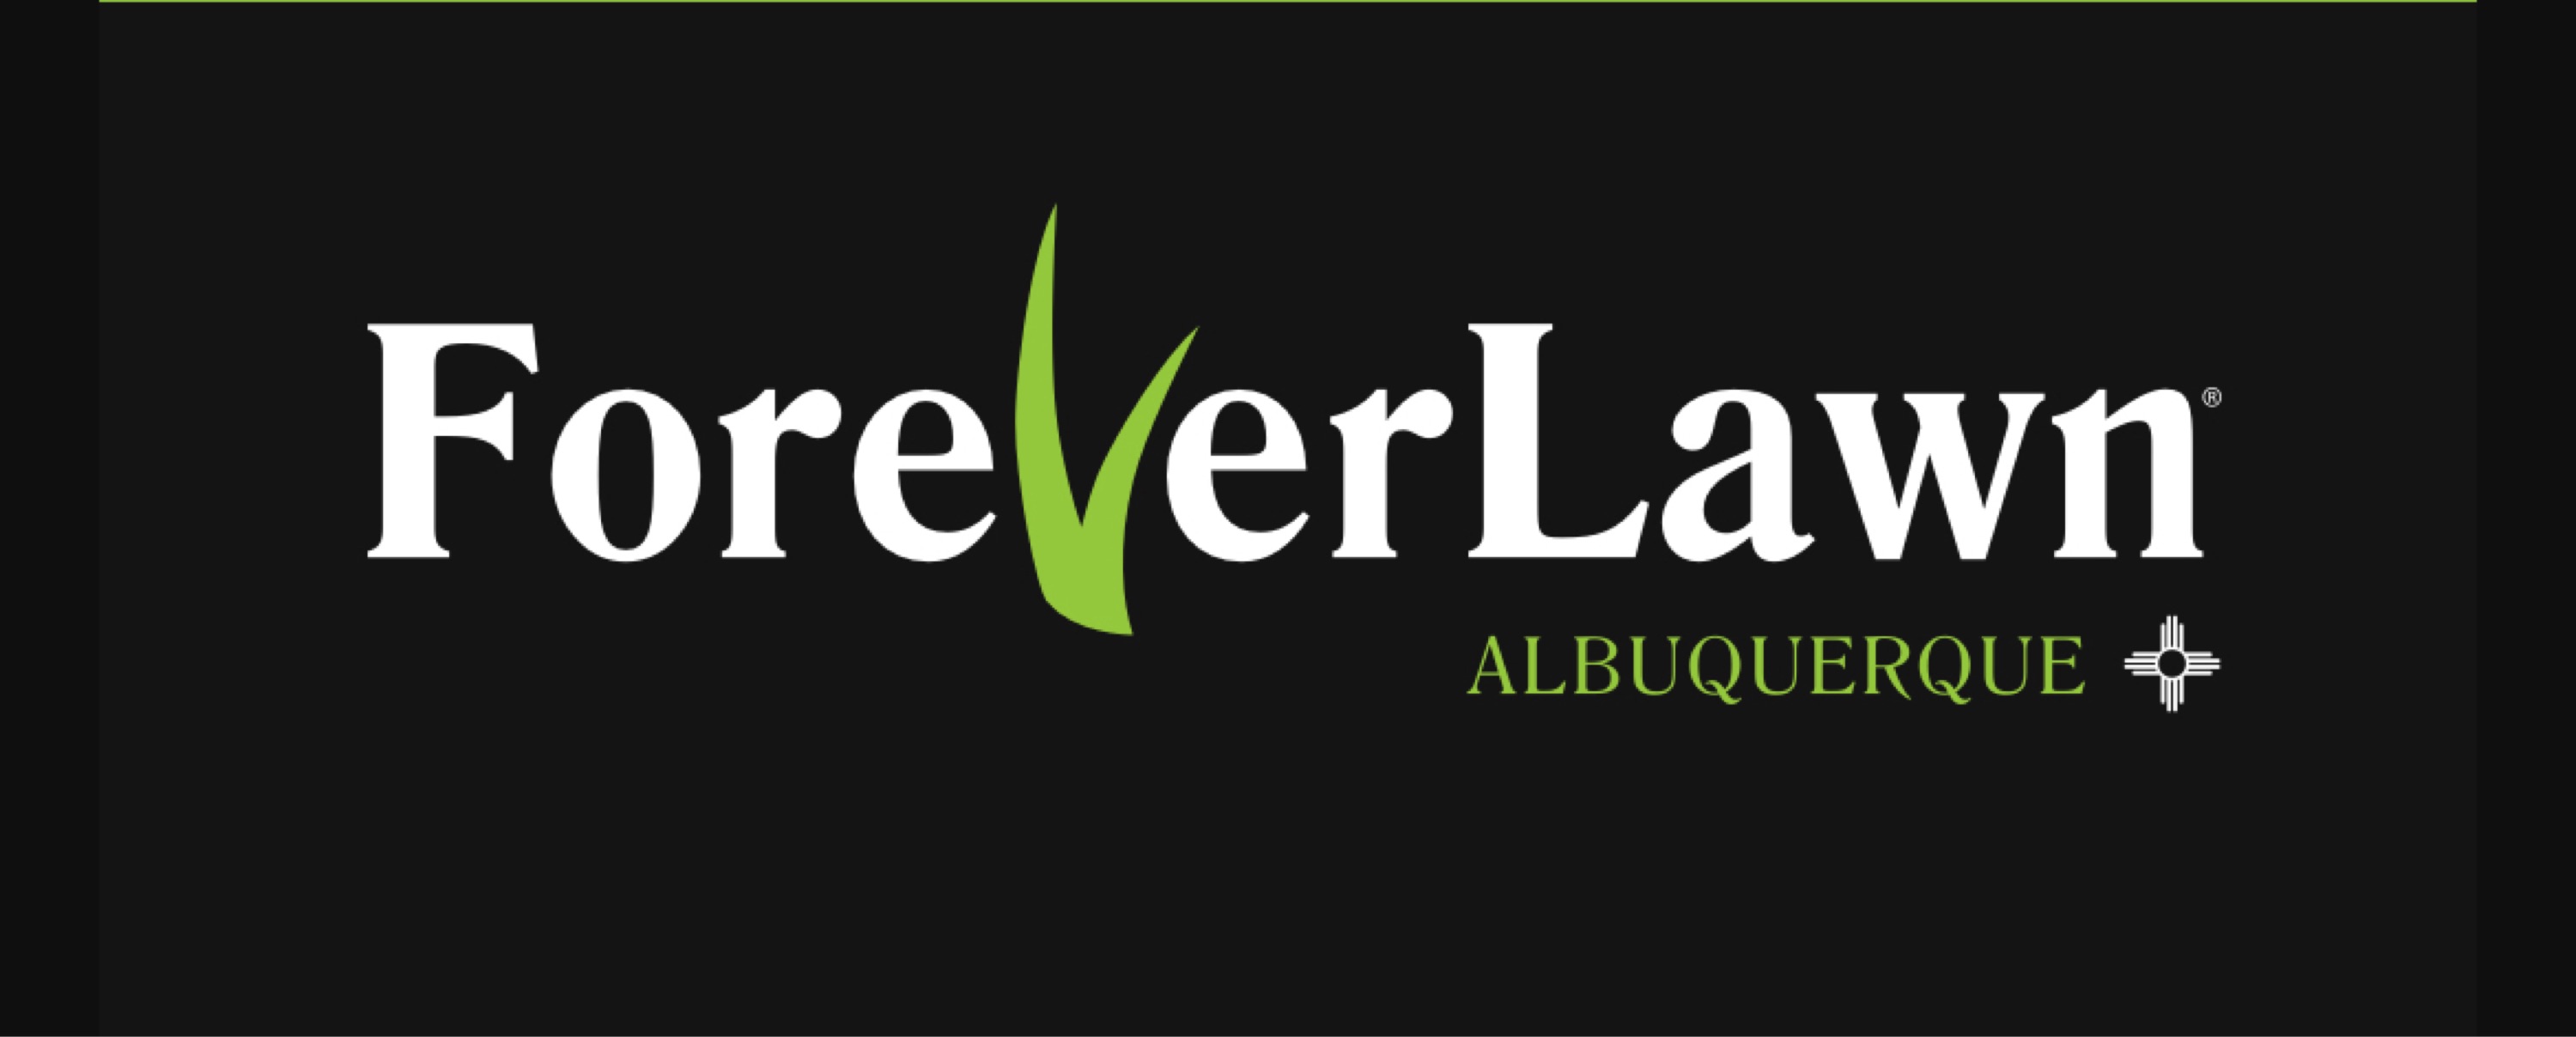 ForeverLawn Albuquerque Logo